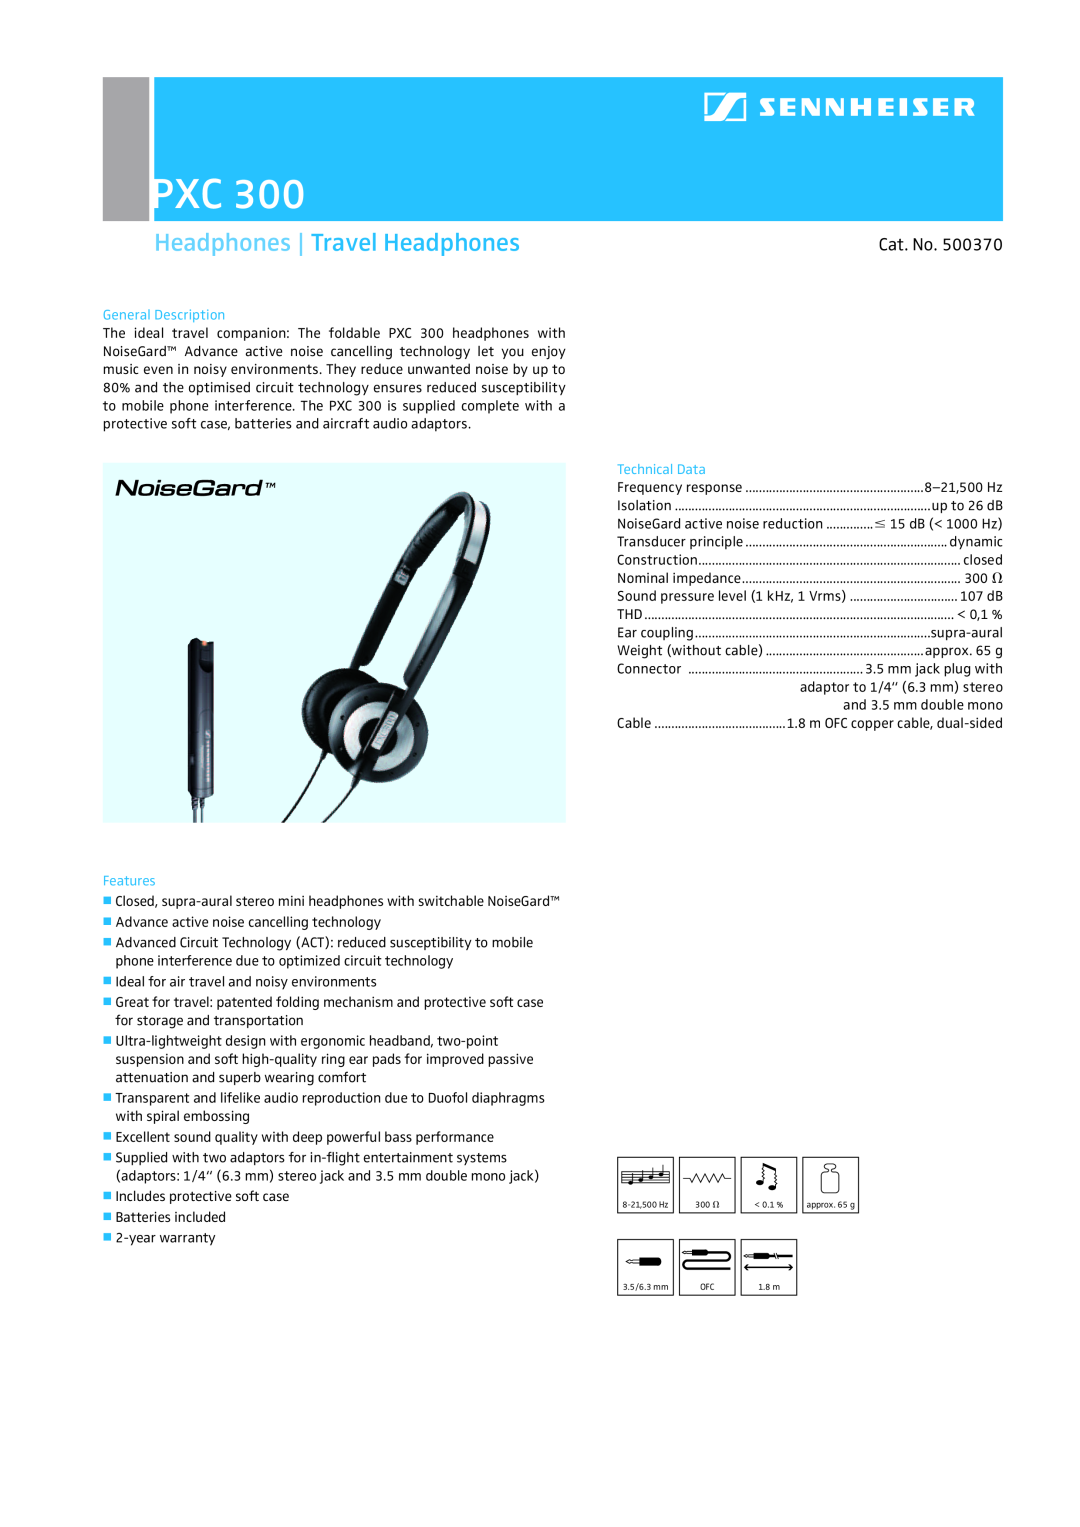 Sennheiser instruction manual PXC 300NoiseGard Advance, Deutsch - Reisekopfhörer PXC, English - Travel headphones PXC 